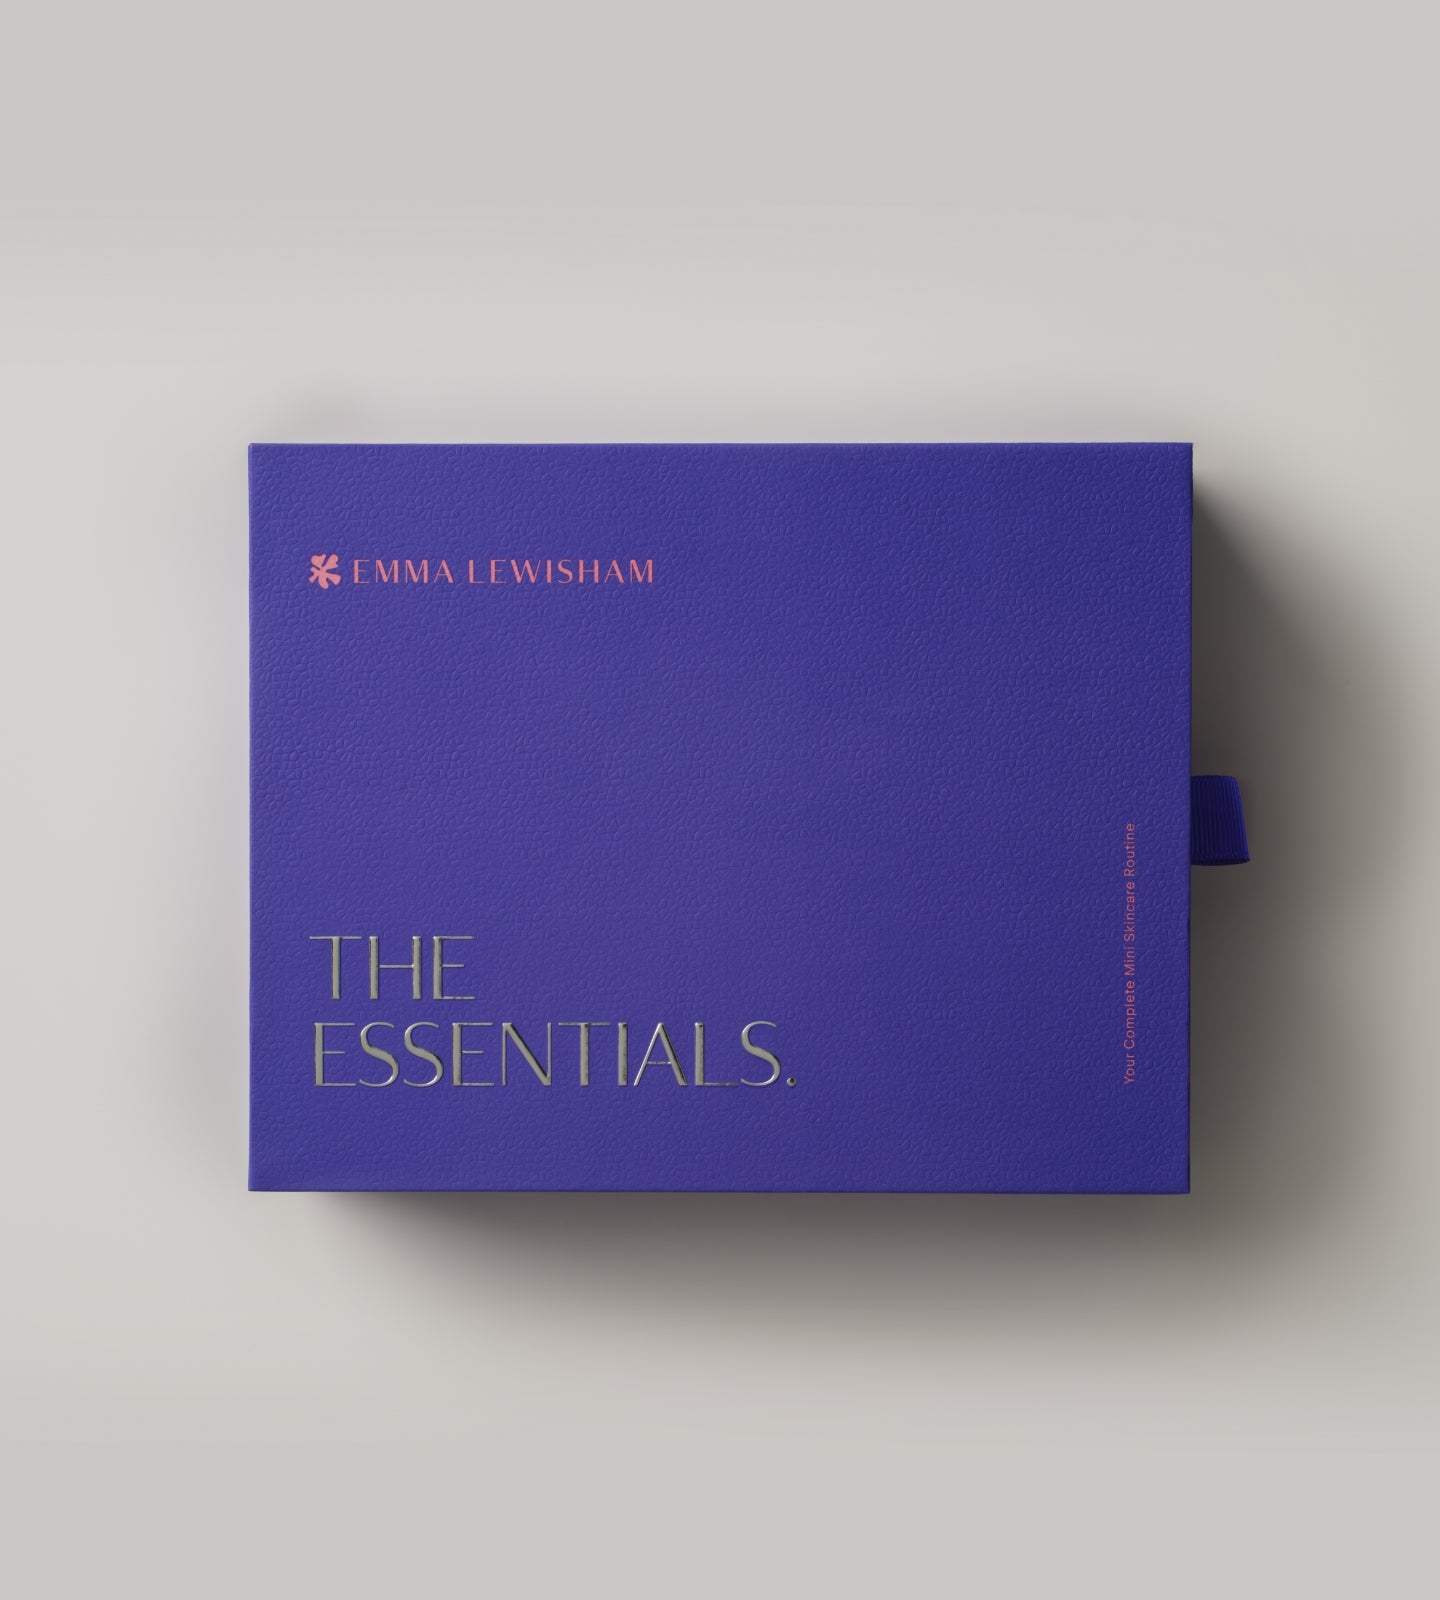 The Emma Lewisham Essentials